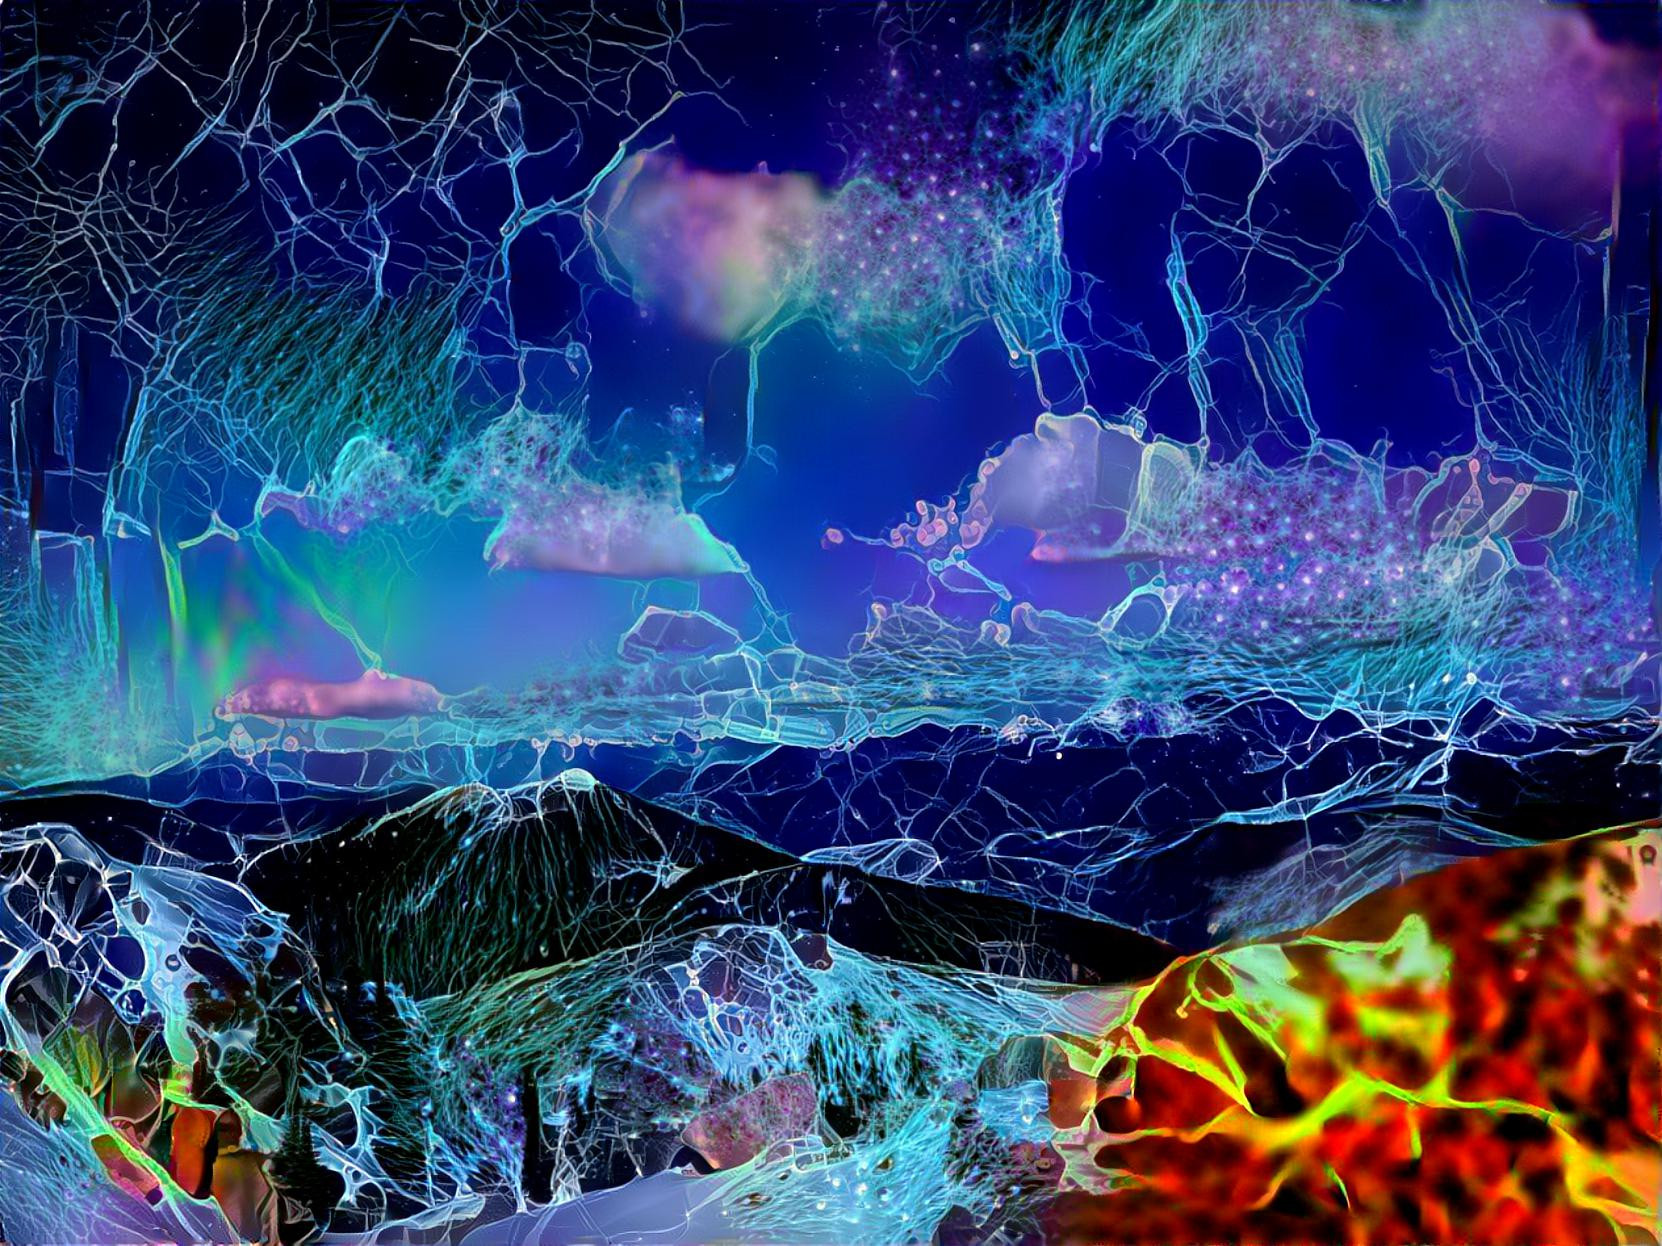 Mountain of Neurons